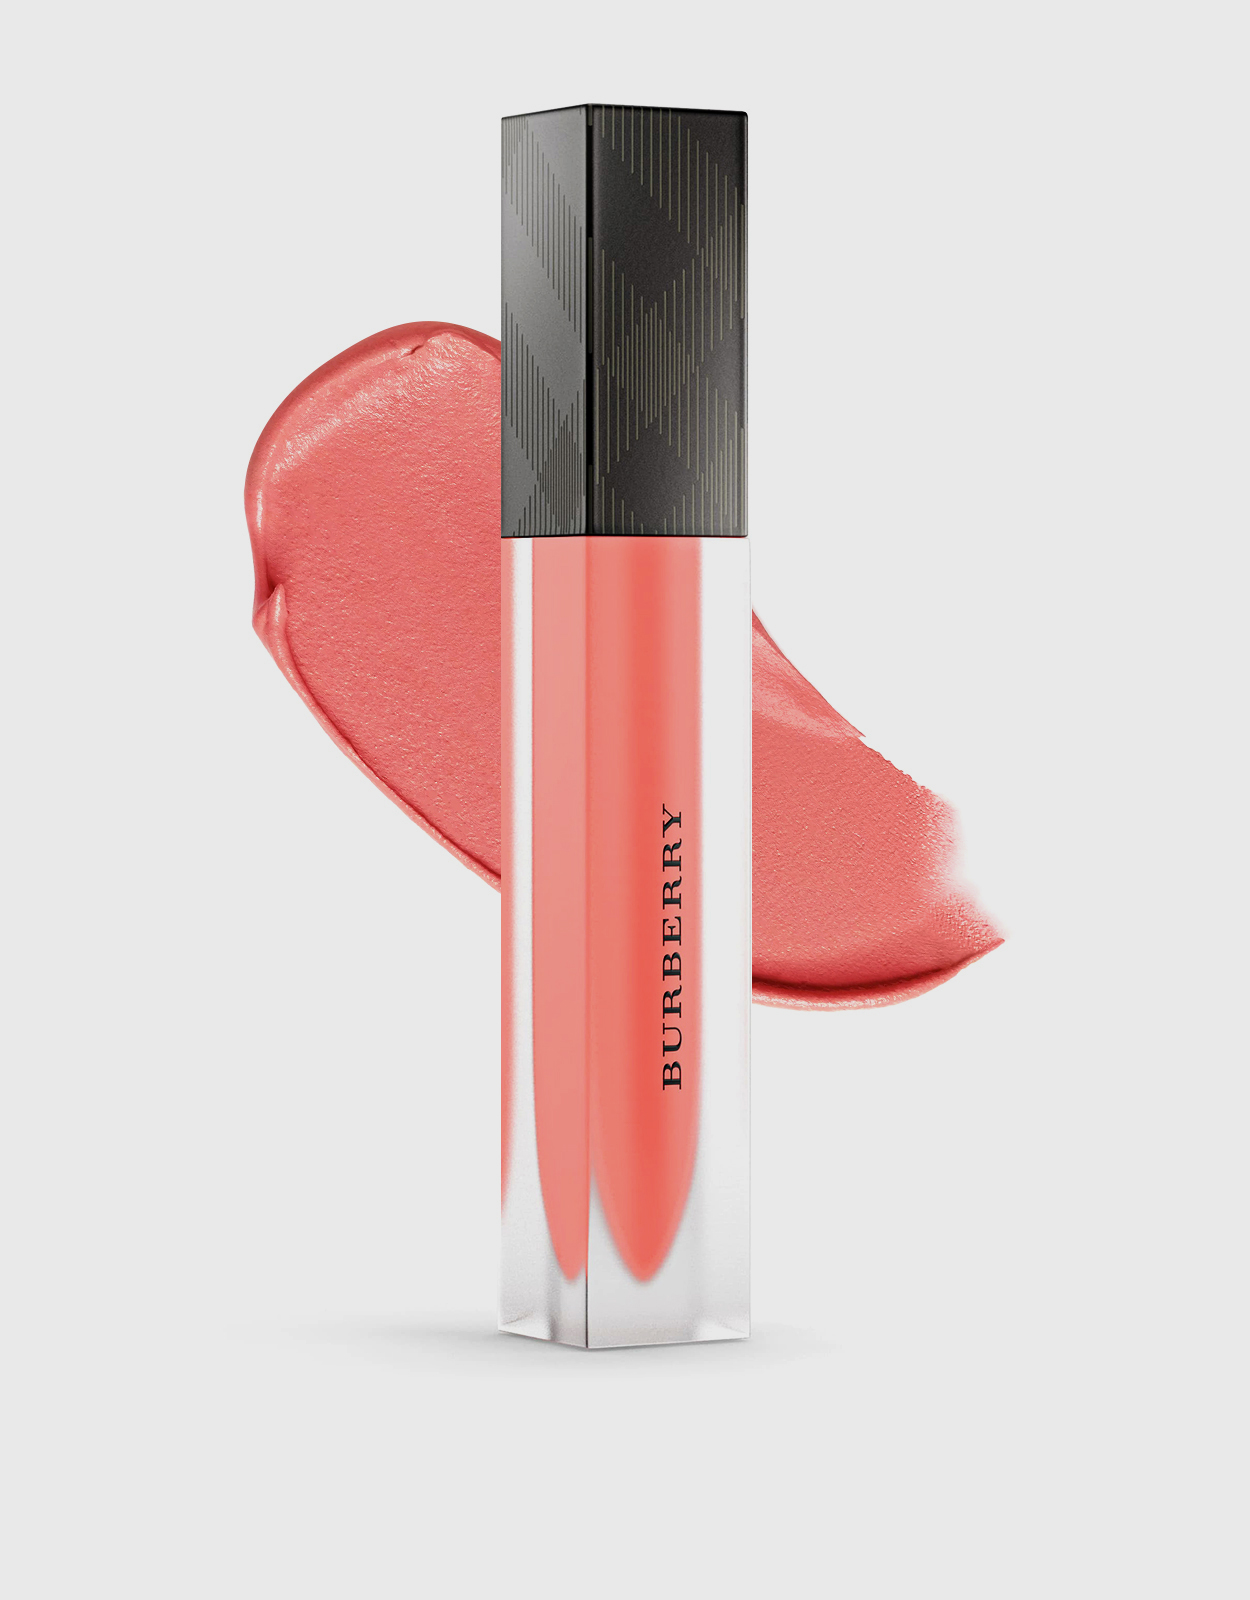 Burberry Beauty Liquid Lip Velvet-25 Peach (Makeup,Lip,Lip stain) 